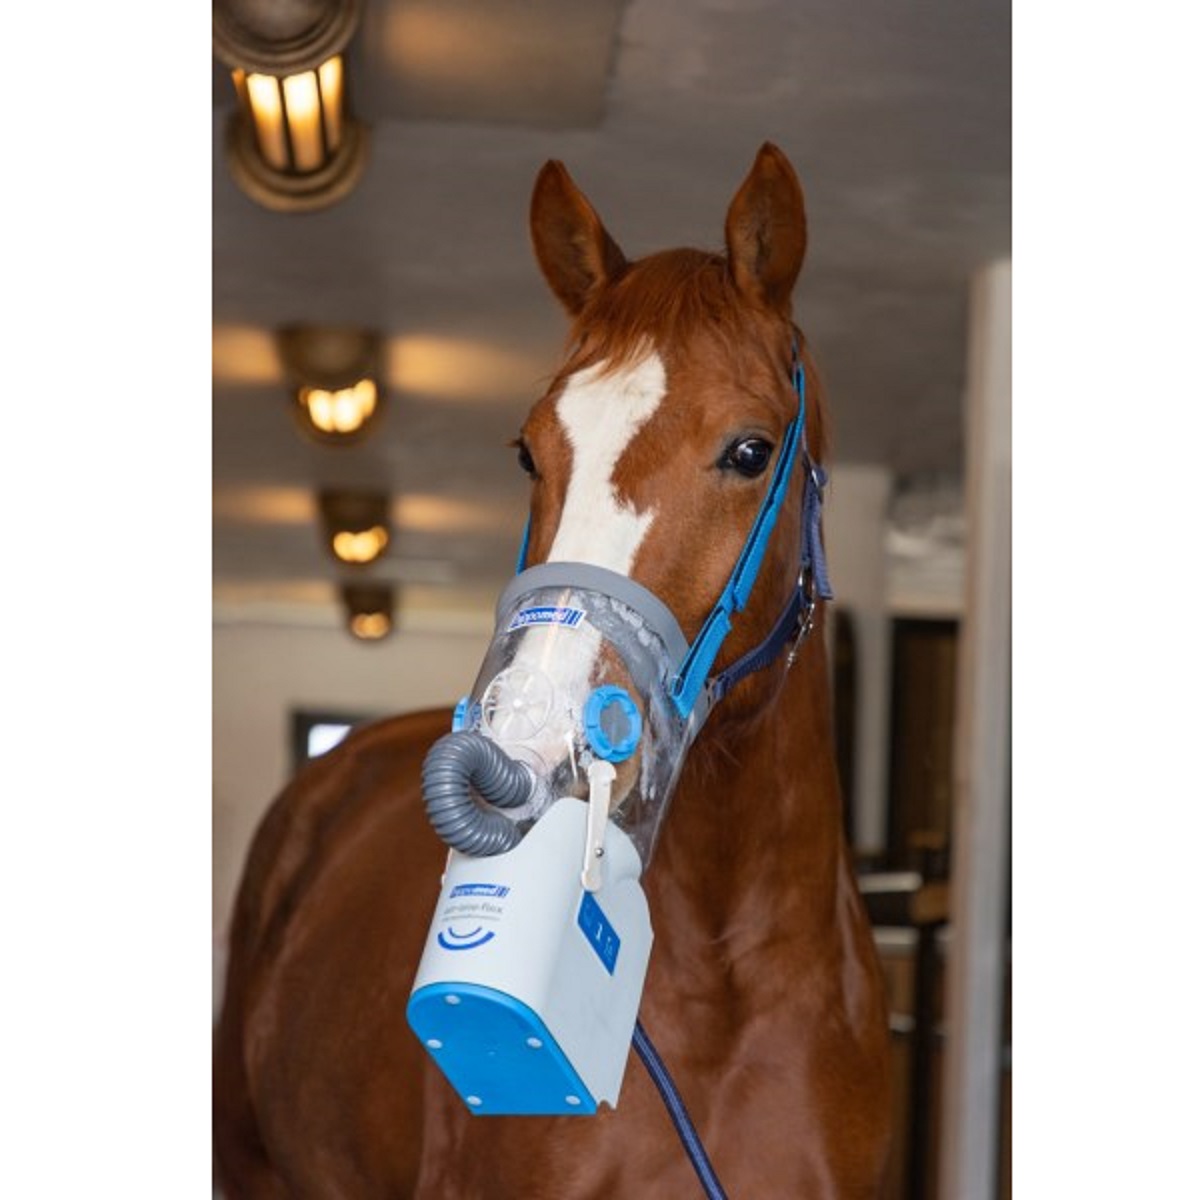 Hippomed Ultrasonic Inhaler Horse AirOne Flex, Battery, without mask